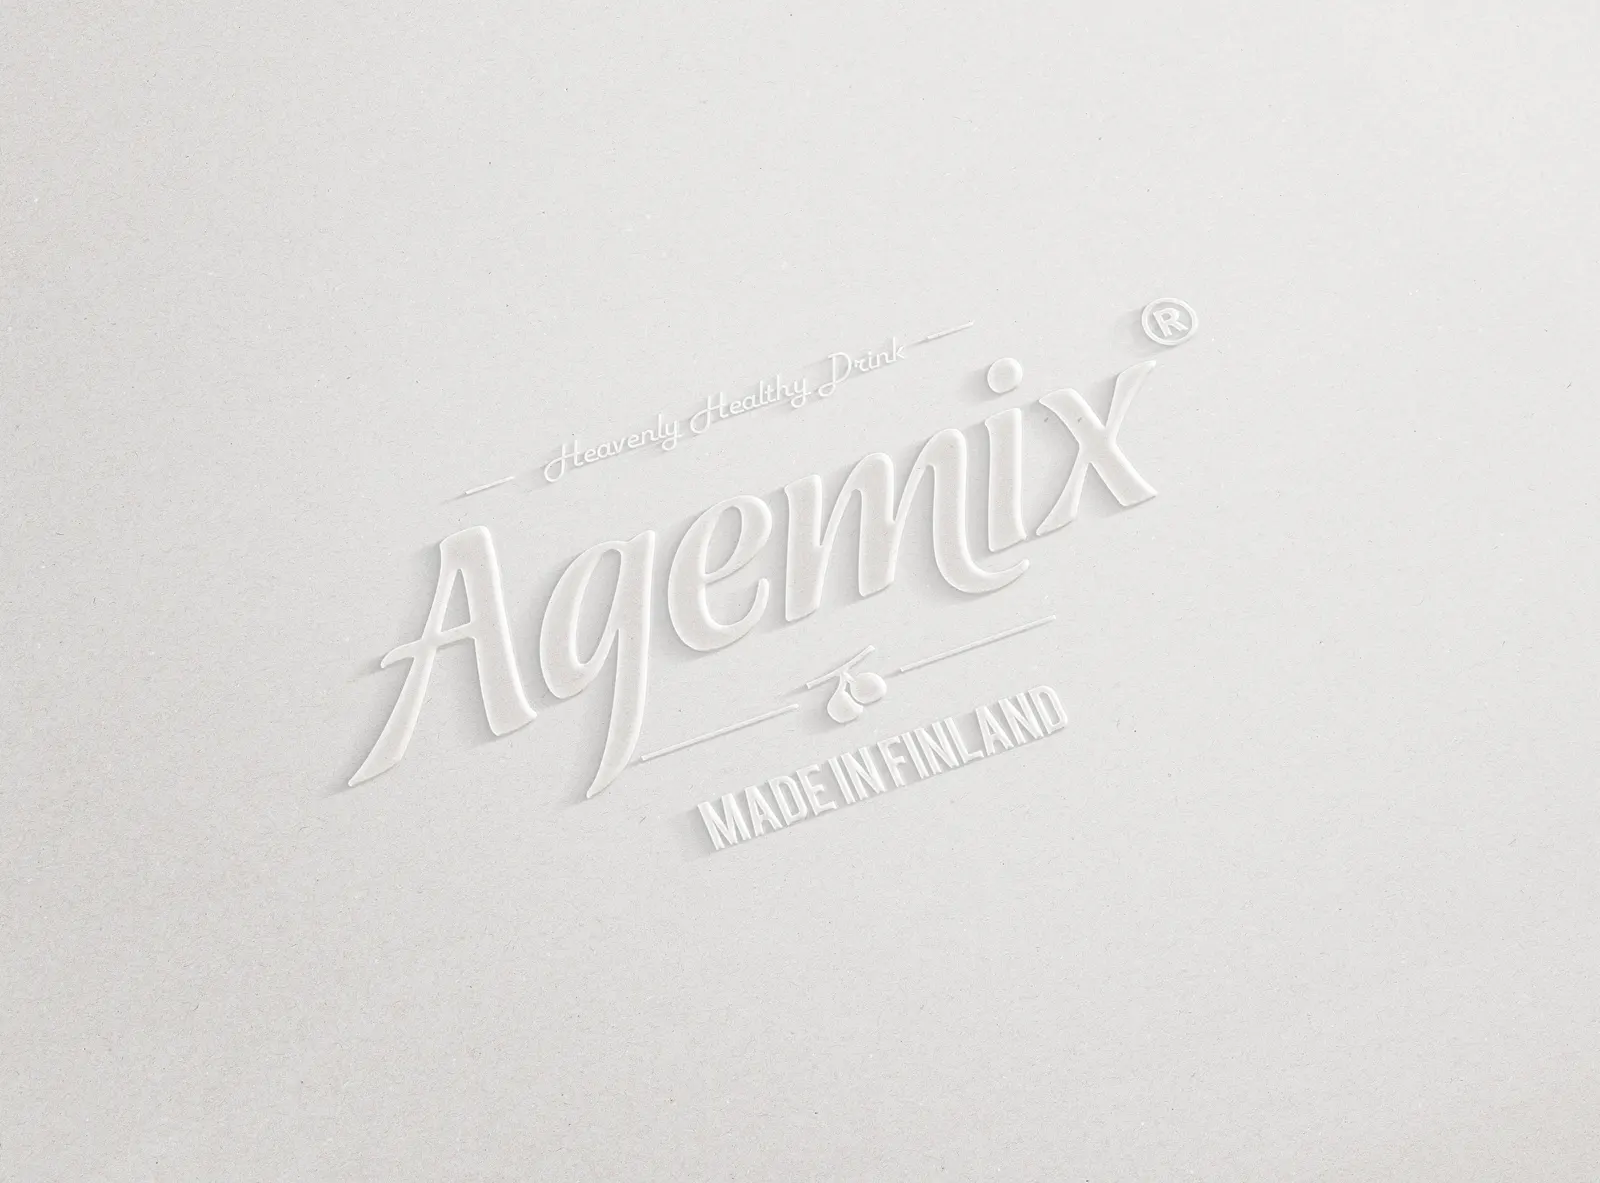 Agemix | 2015 | Estónia